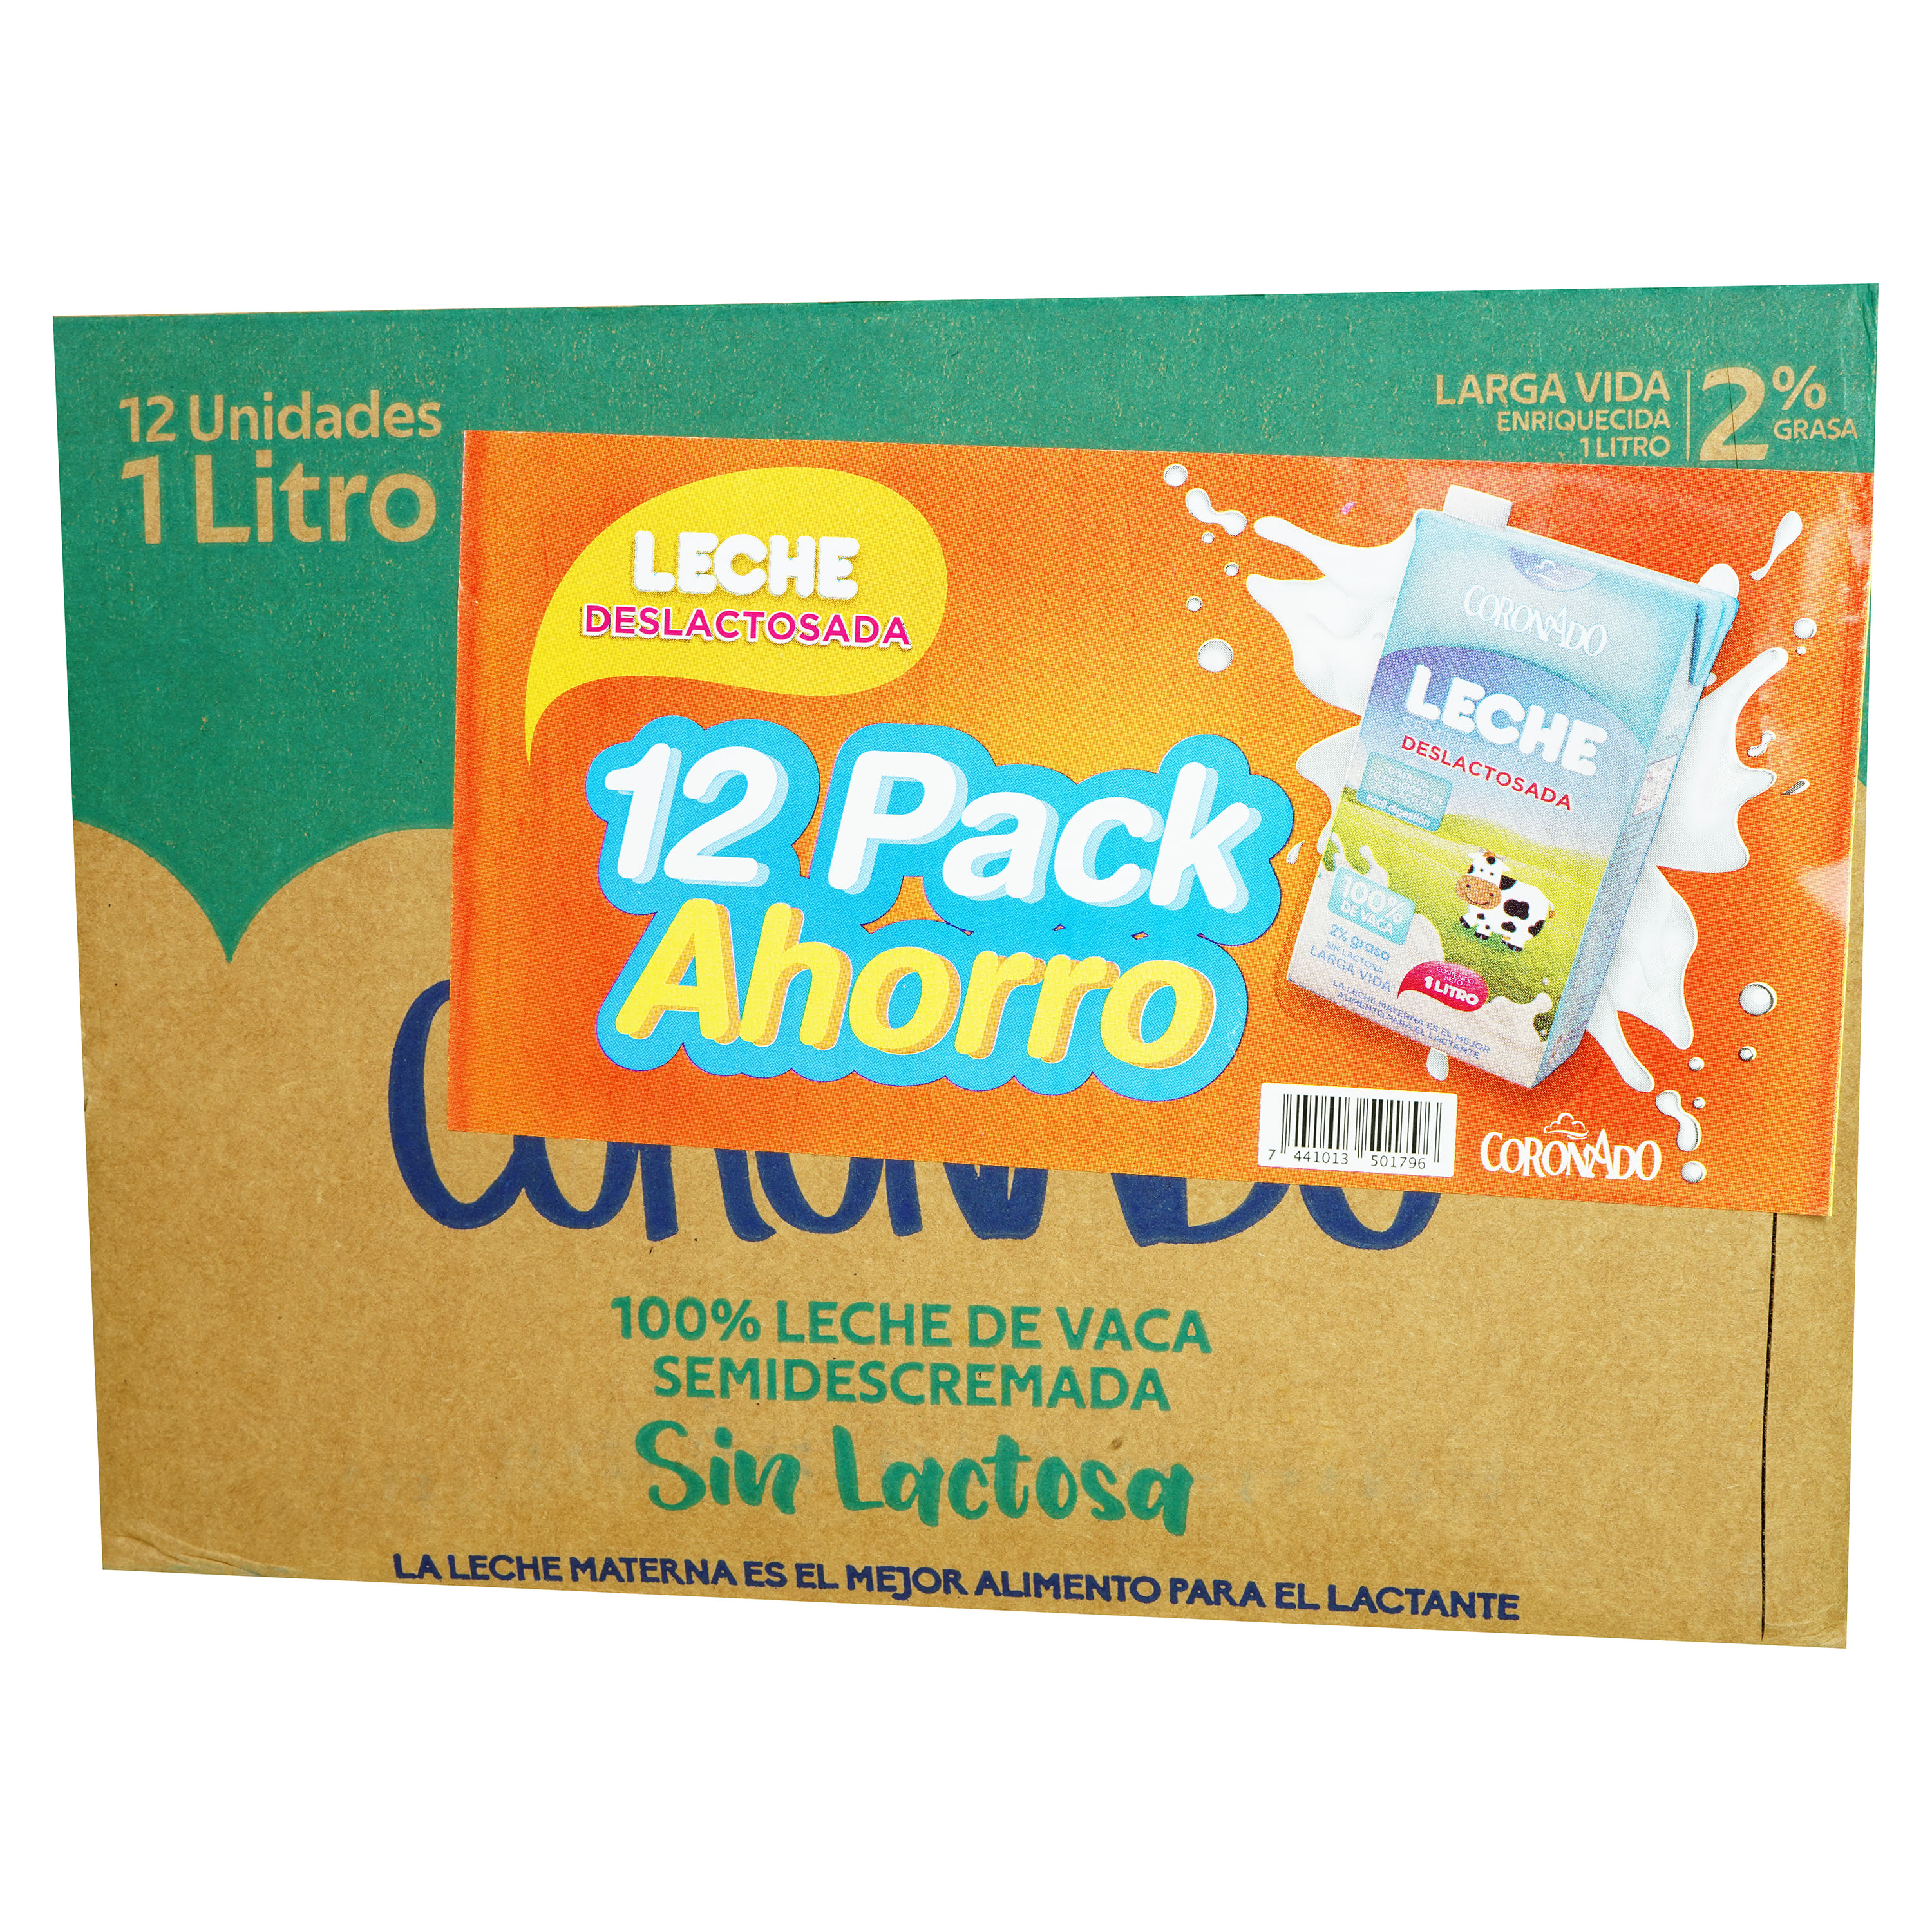 12-Pack-Leche-Coronado-Uht-Deslactosada-2-Grasa-12000Ml-1-51889